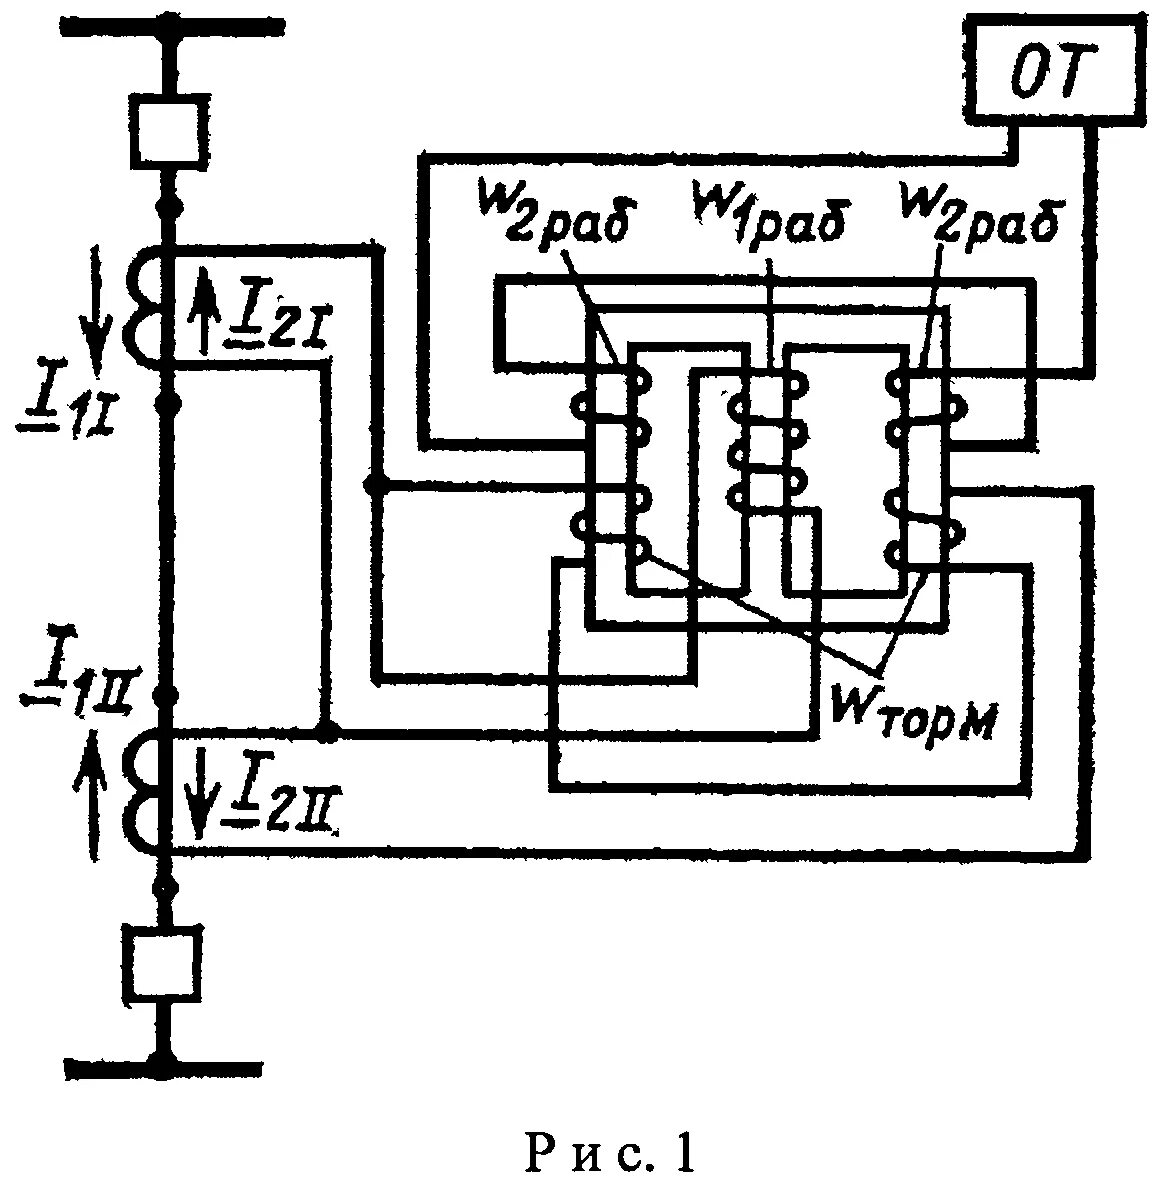 Схема реле ДЗТ-11. ДЗТ трансформатора реле. ДЗТ-11 реле дифзащиты трансформатора. Трансформатора трехобмоточного ДЗТ-11.